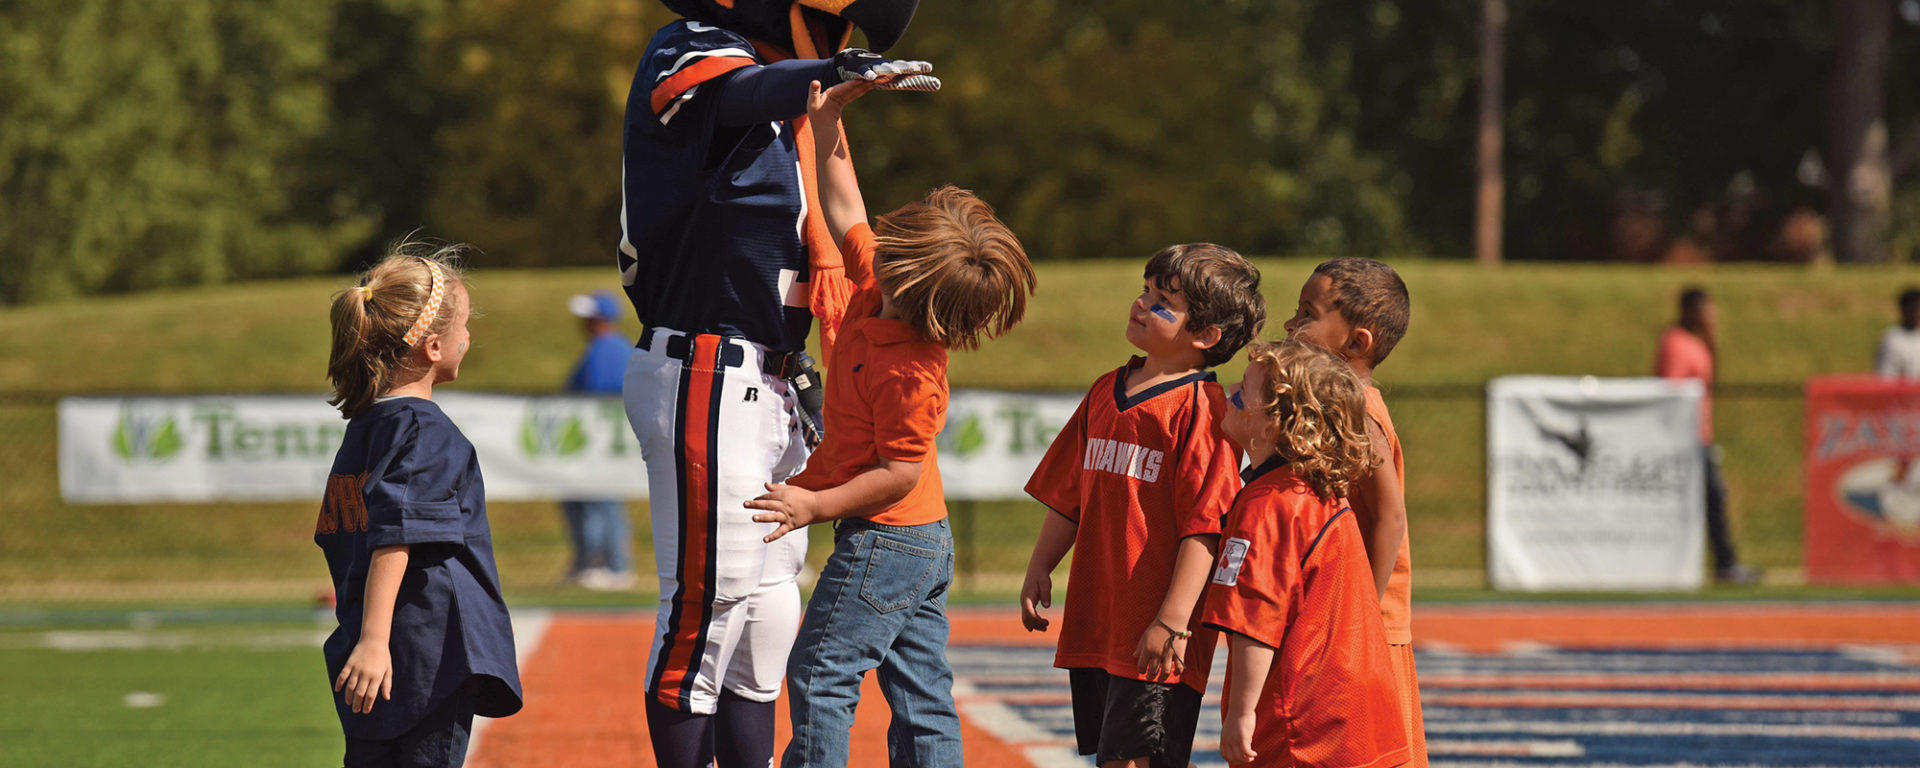 Captain Skyhawk mascot giving high fives to small children